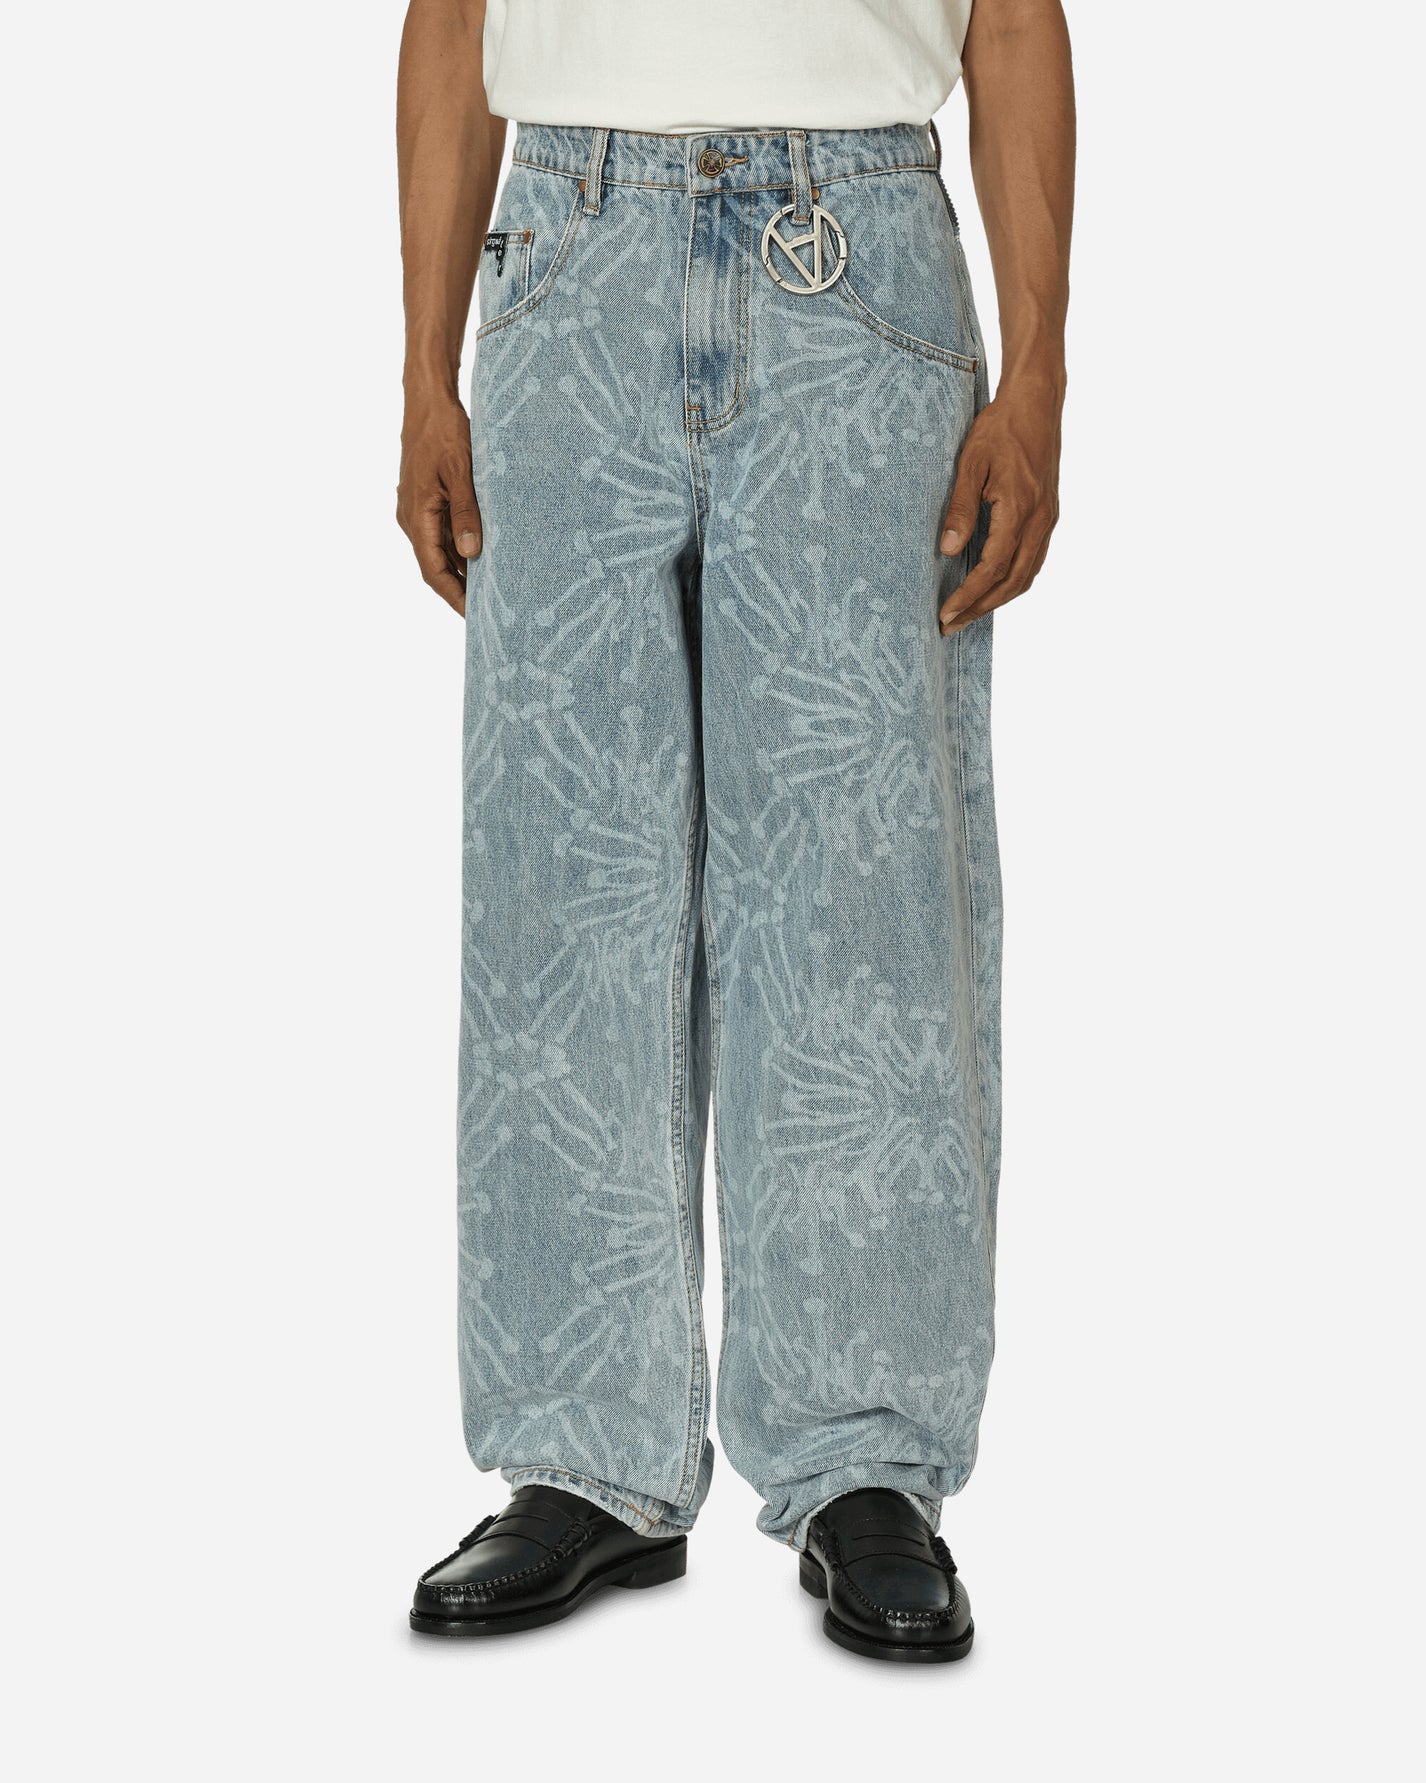 Stingwater Speshal Connection Jeans Blue  Pants Denim SPESHALJEAN BLU